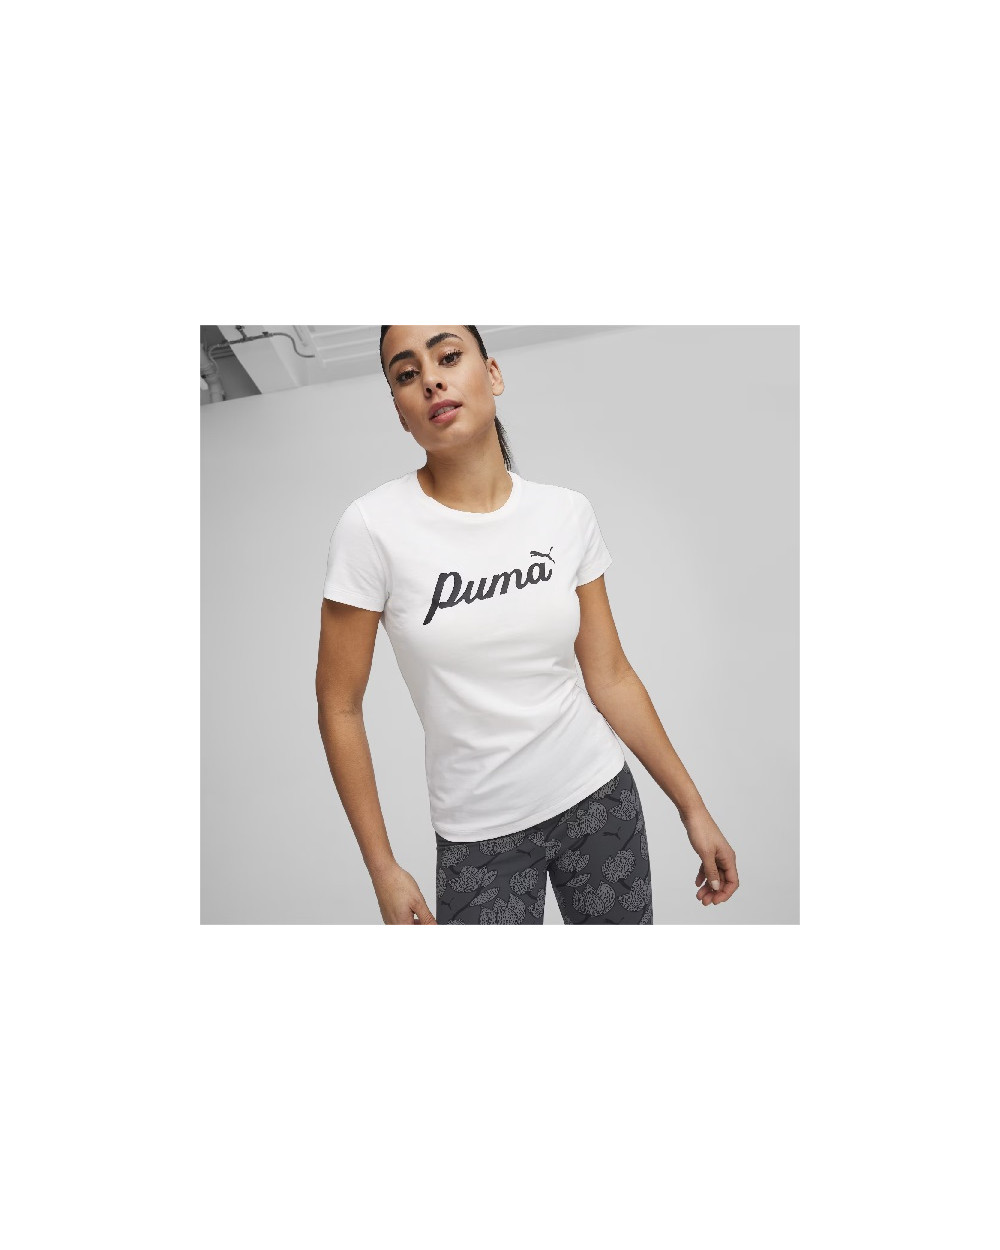 T-shirt puma donna bianco 679315